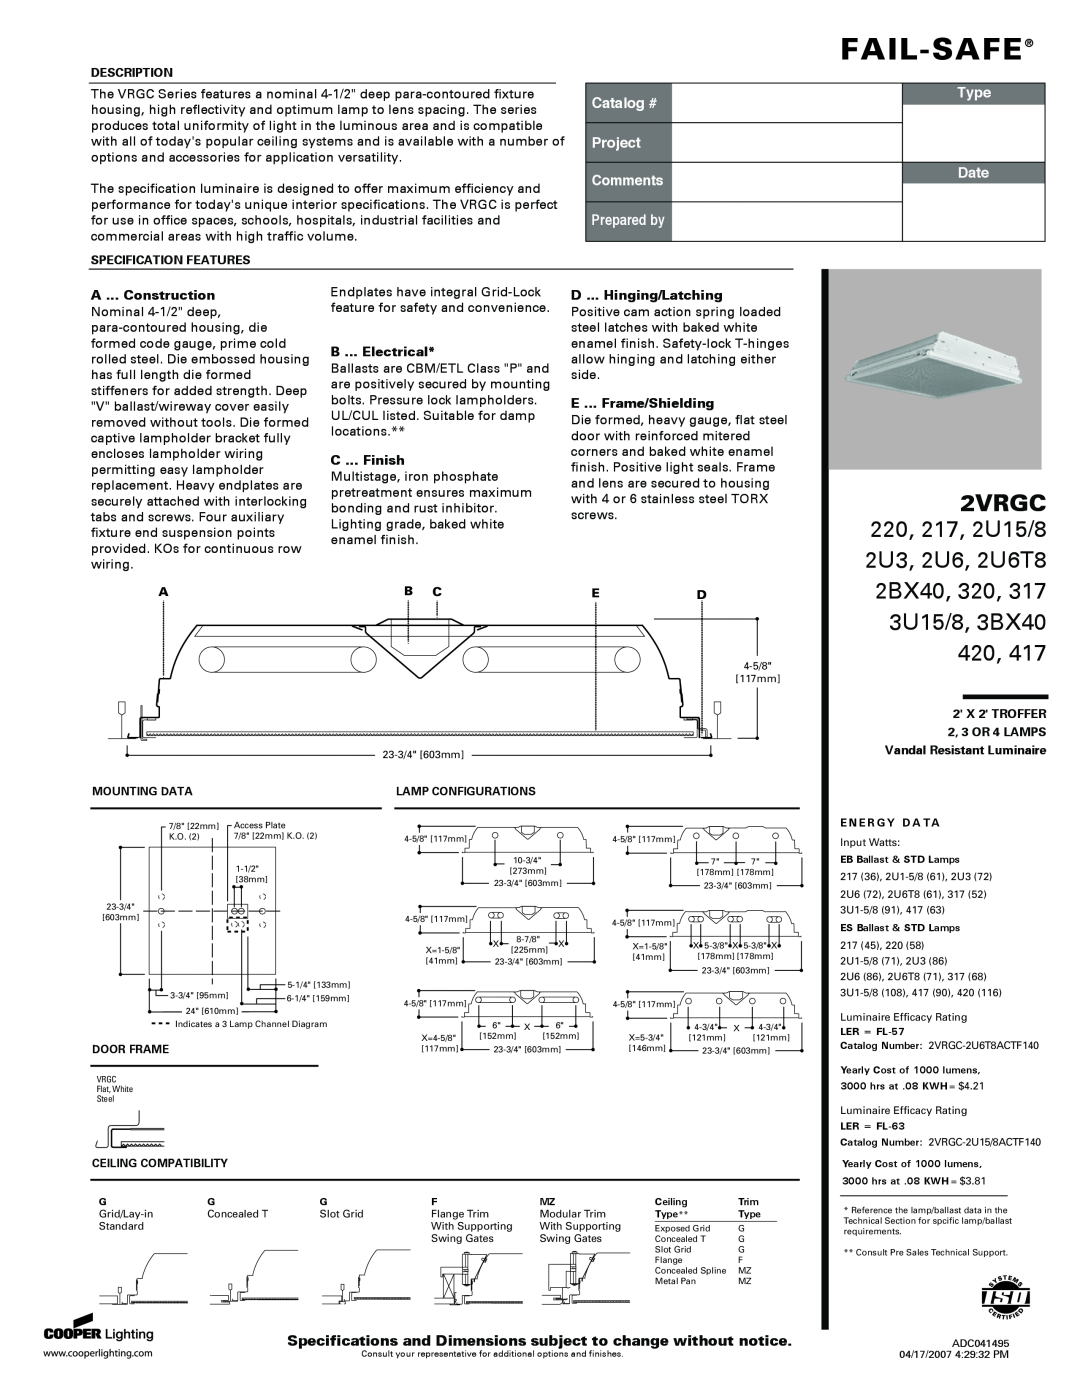 Cooper Lighting Indoor Furnishings specifications Fail-Safe, 2VRGC, 220, 217, 2U15/8 2U3, 2U6, 2U6T8, Catalog #, Type 